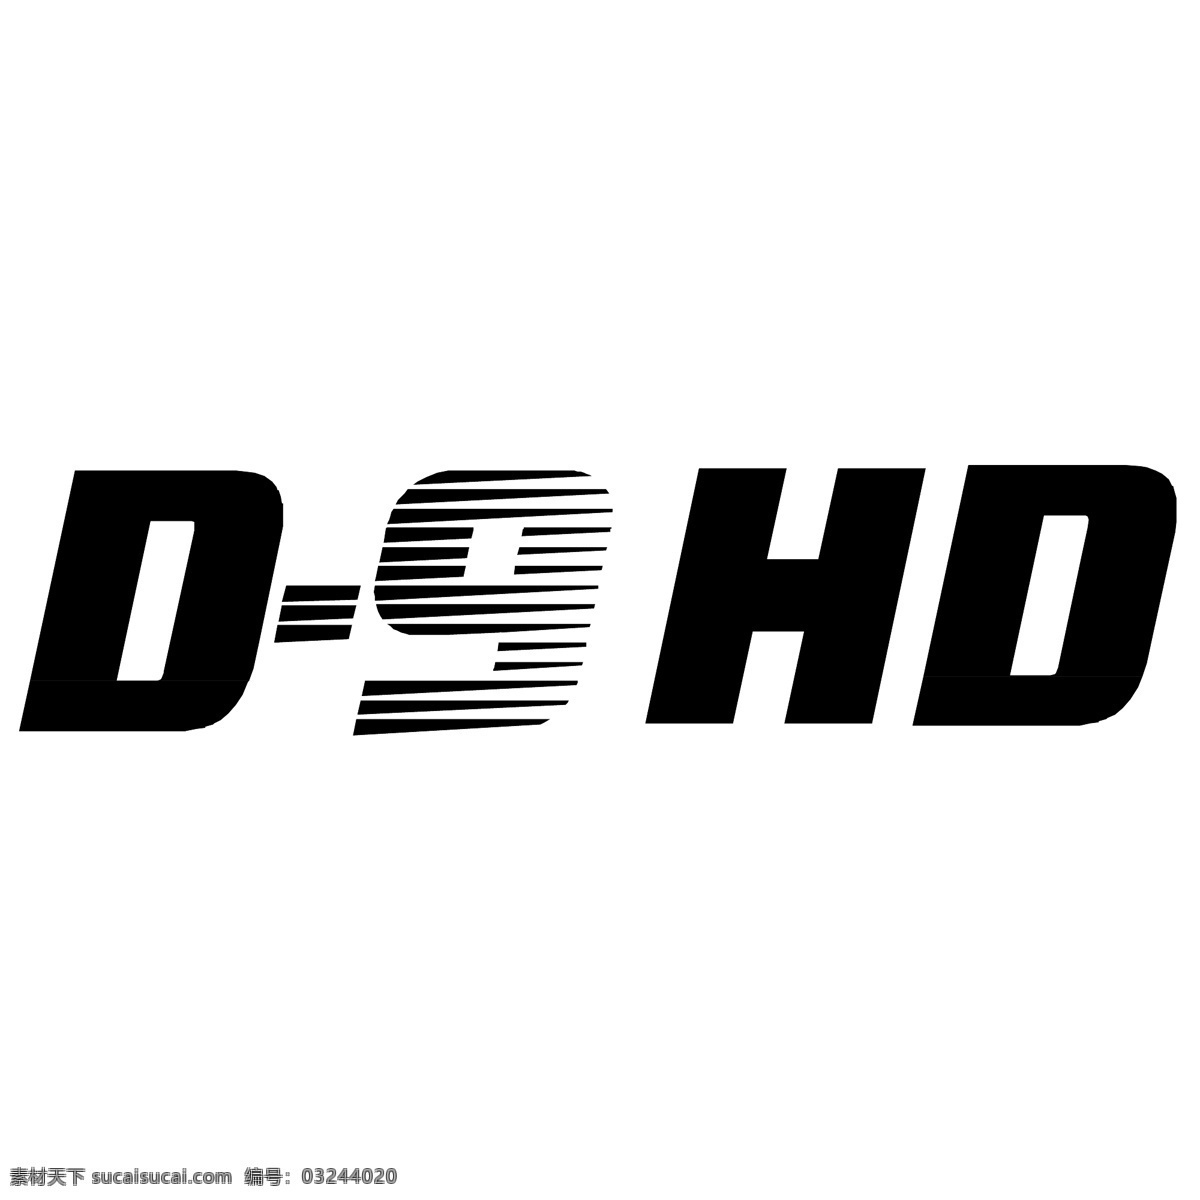 hd 黑白 logo 微粒体 彩色 简约 创意 英文 时尚 白色